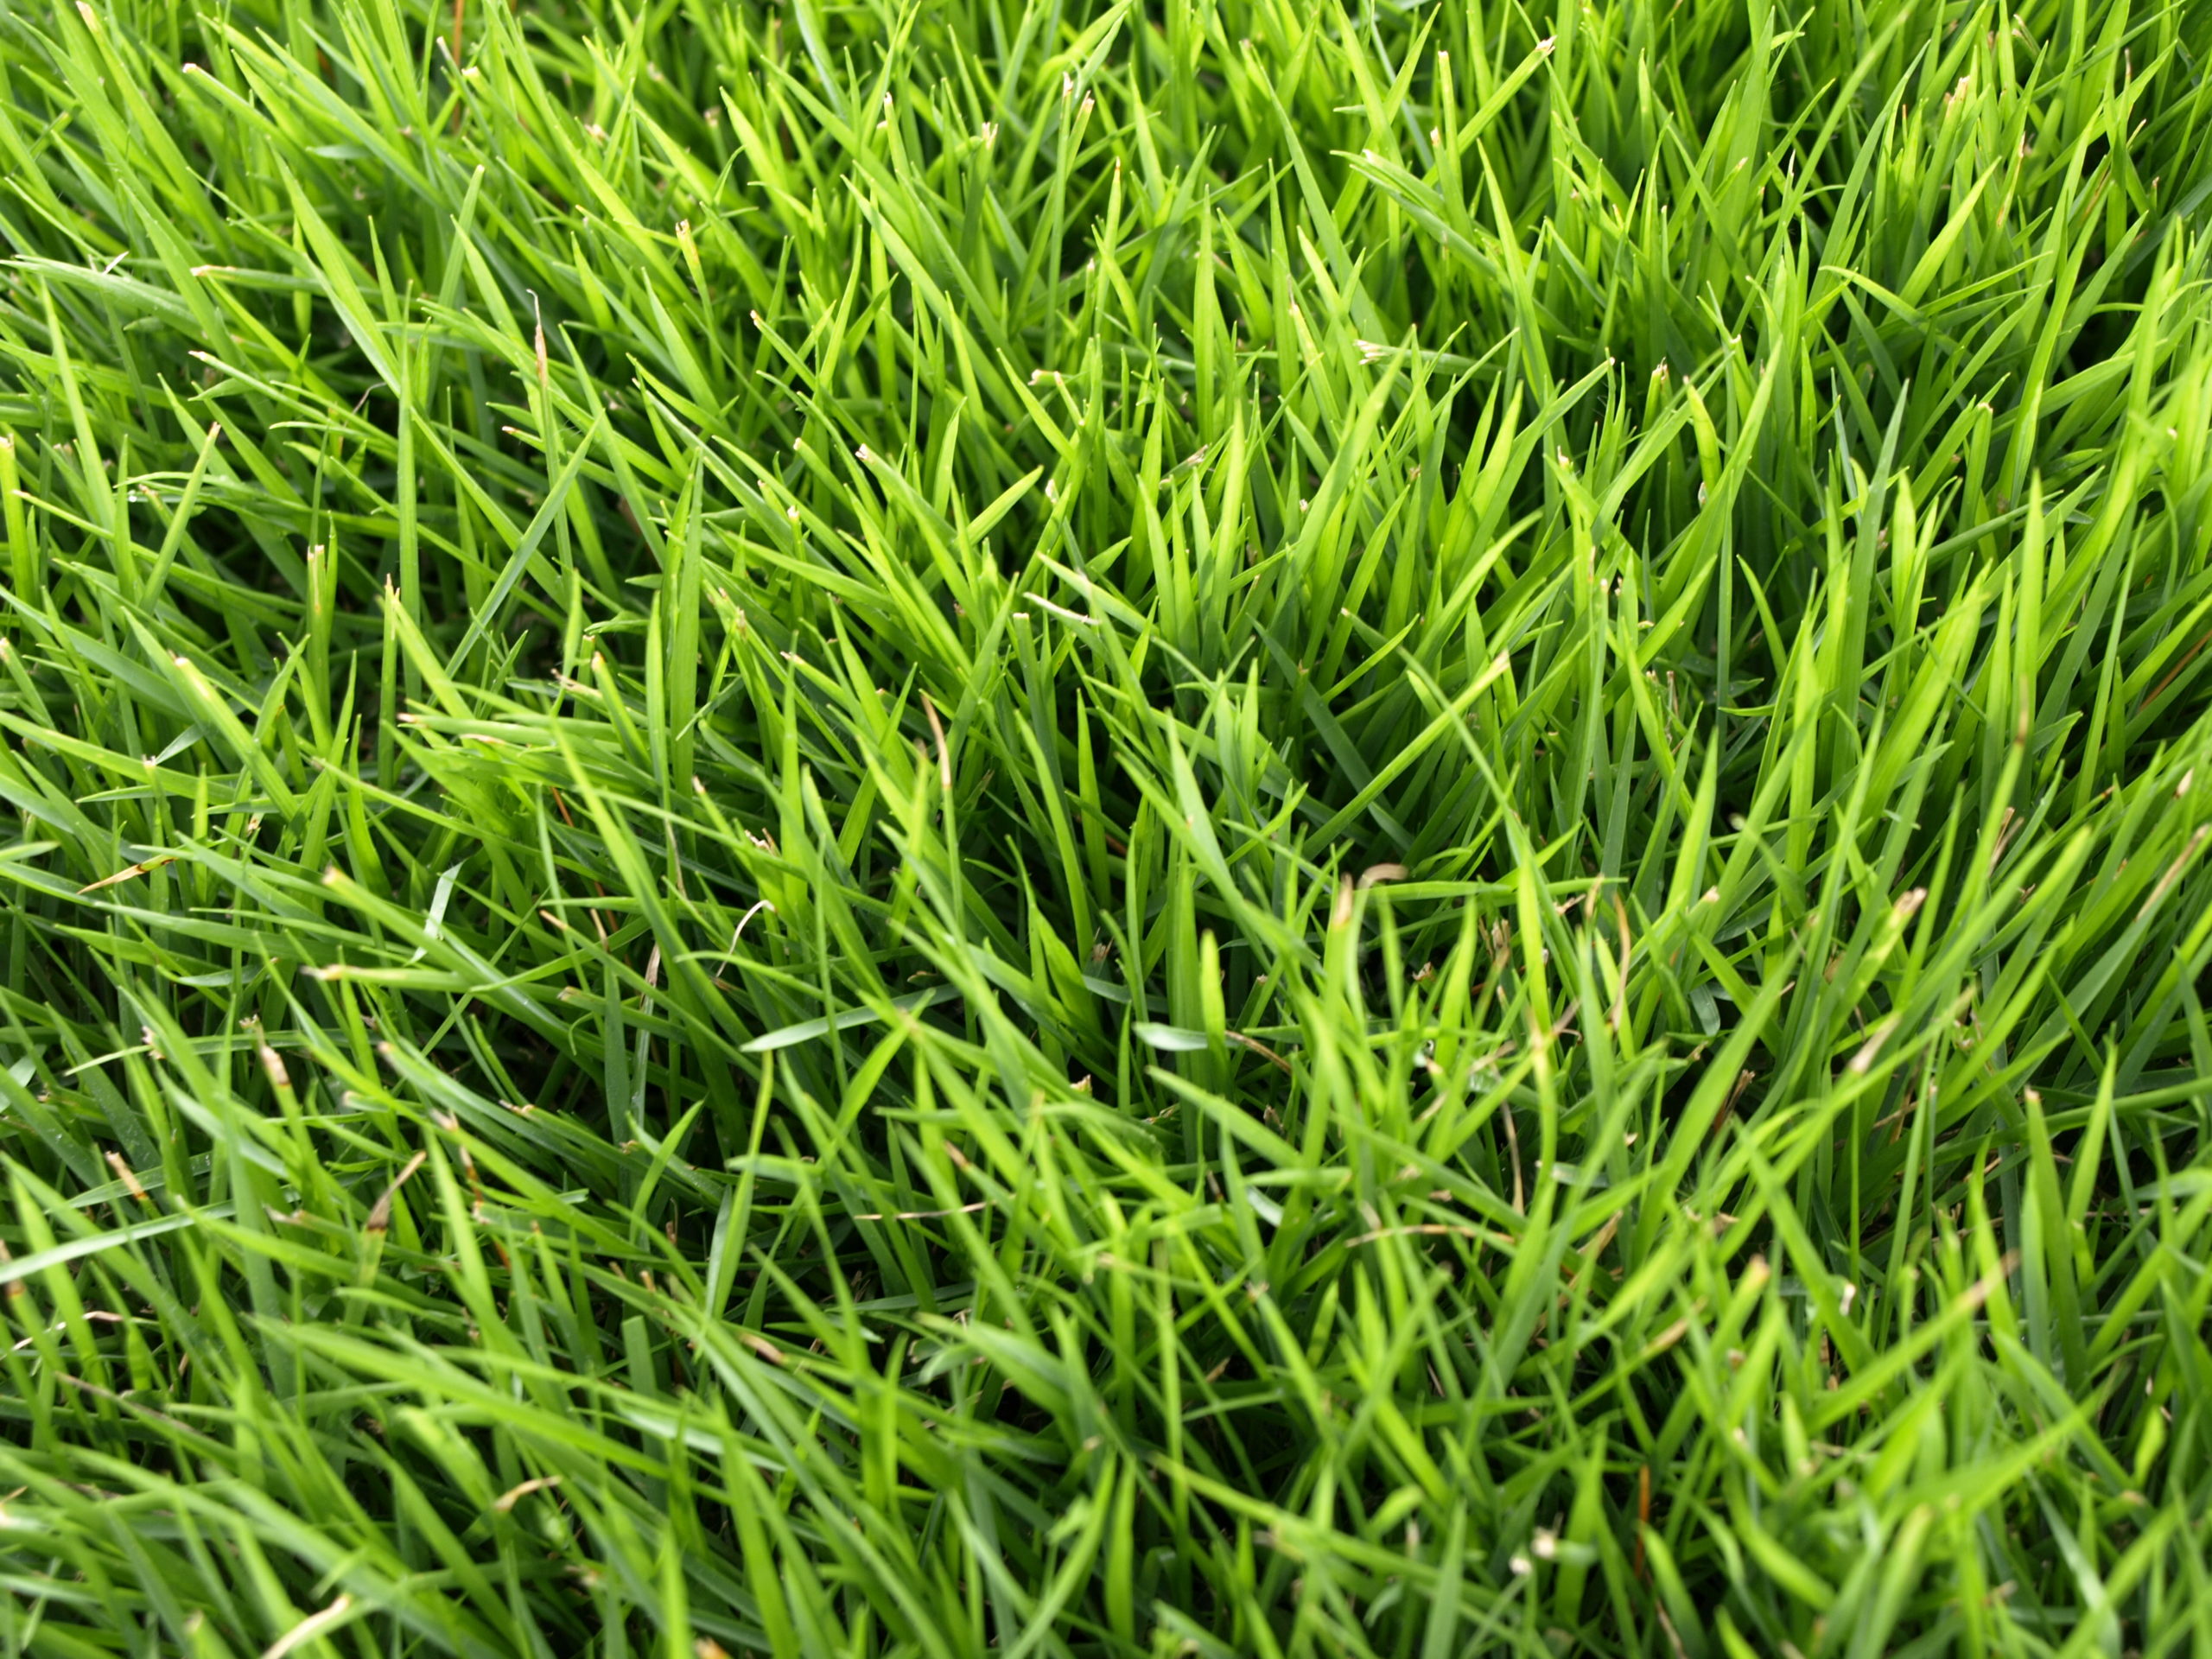 Benefits of Zoysia Grass